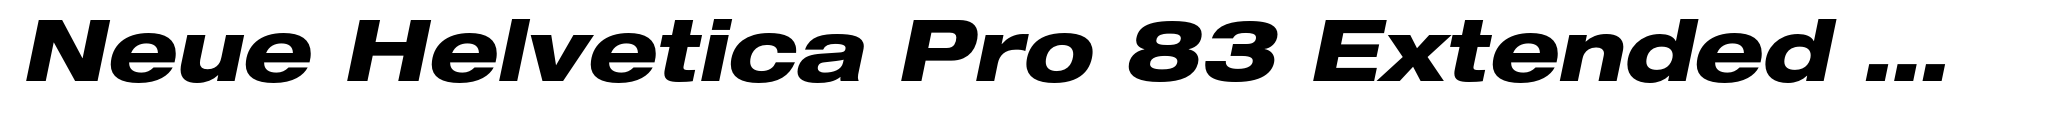 Neue Helvetica Pro 83 Extended Heavy Oblique image